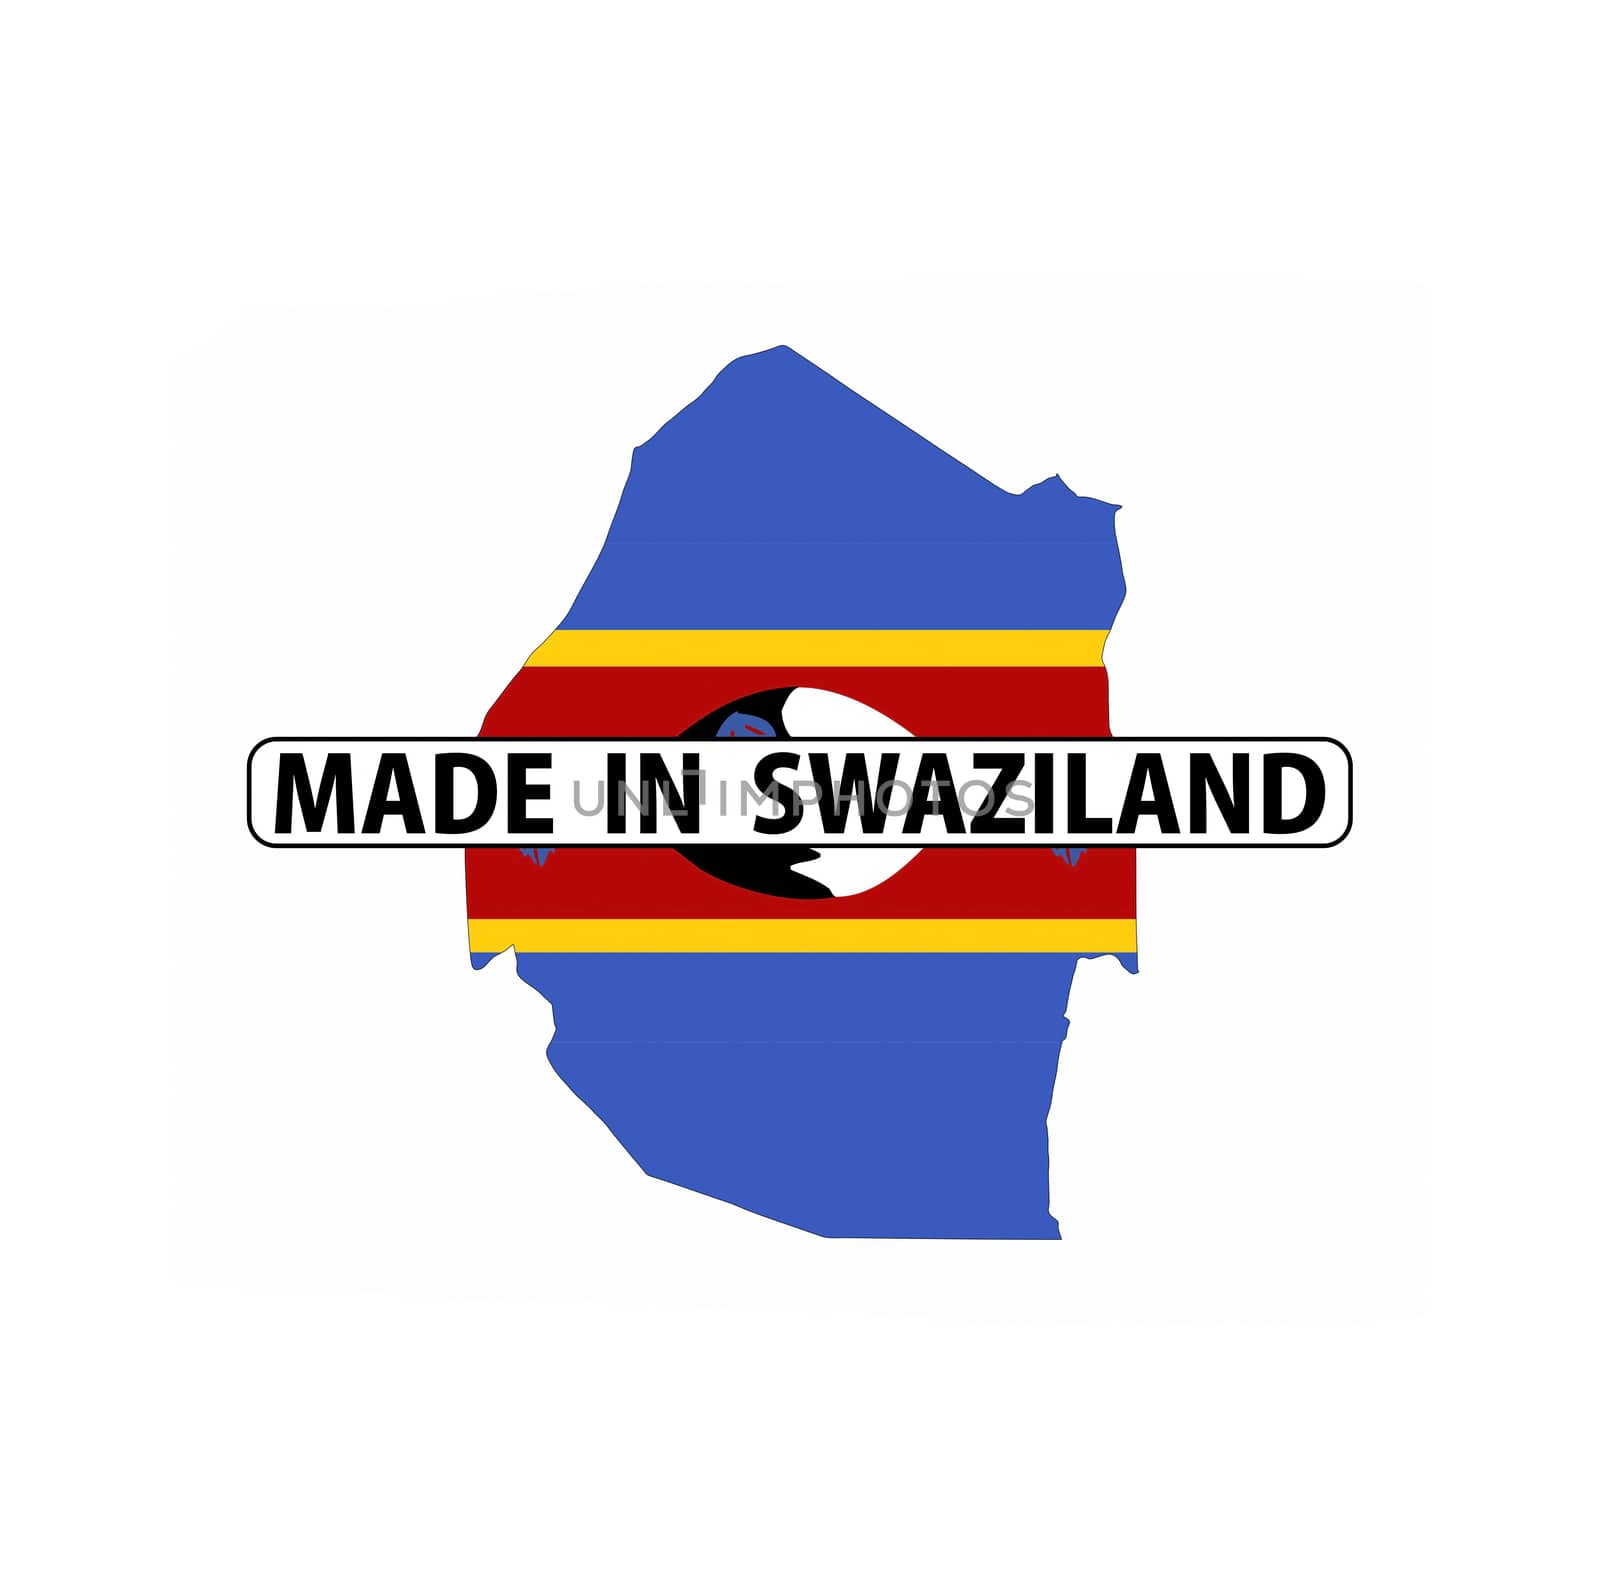 made in swaziland by tony4urban